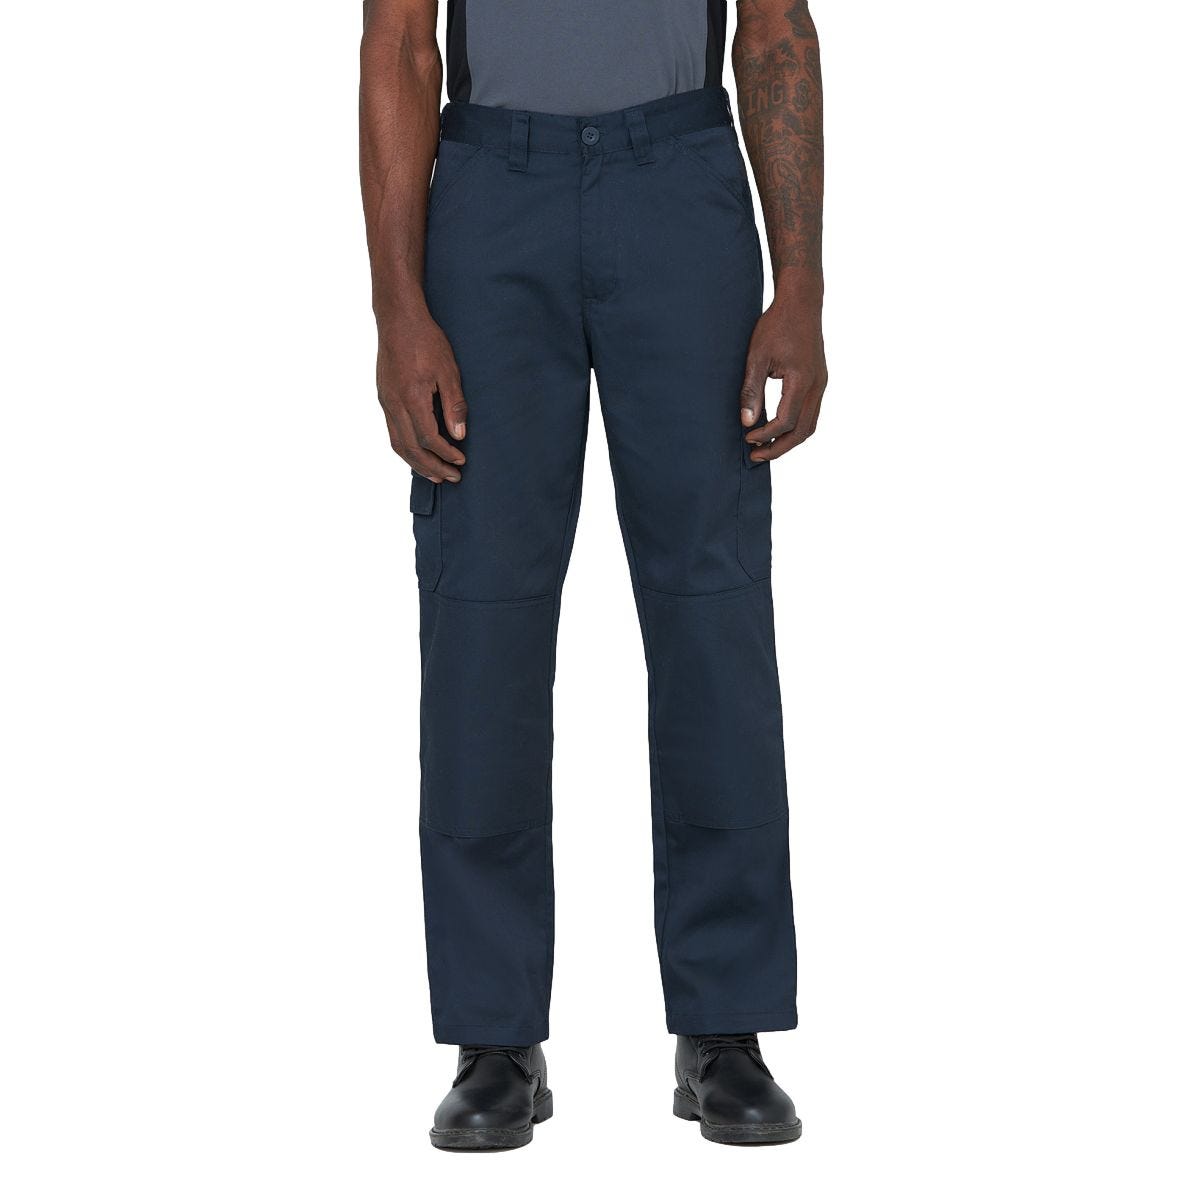 Pantalon Everyday Bleu marine - Dickies - Taille 52 2